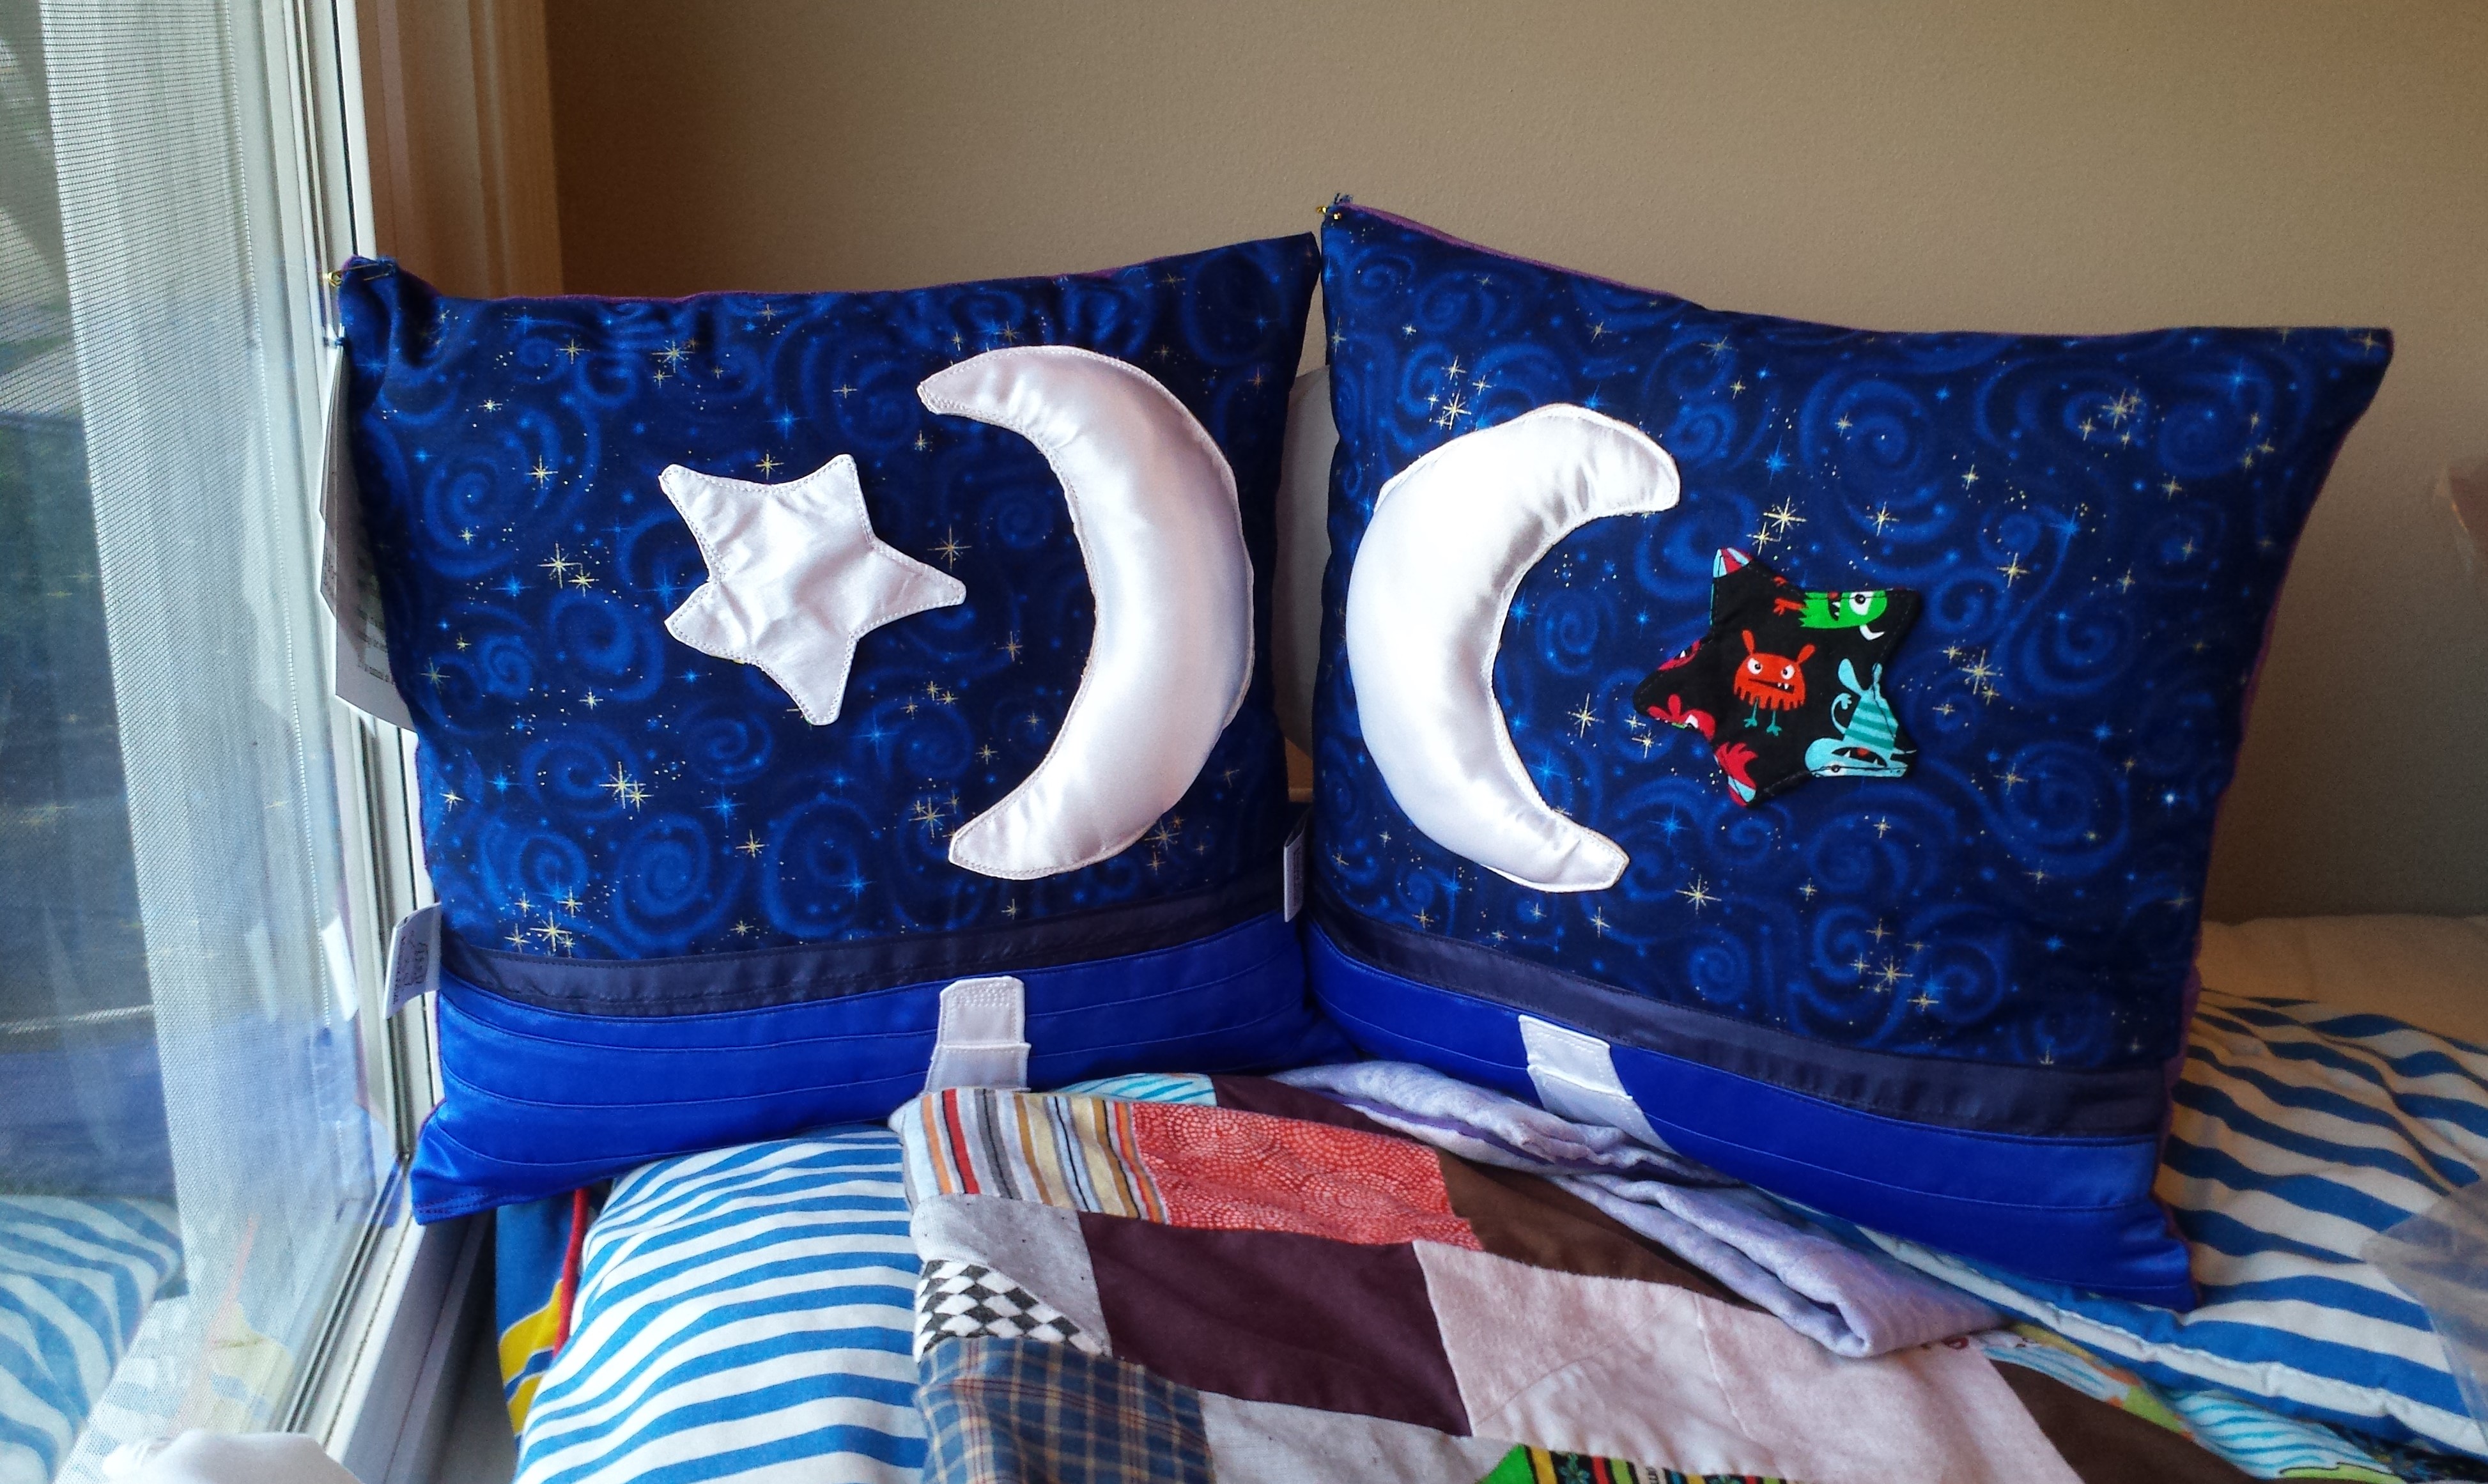 Pair of Night pillows Jan 1 2019.jpg